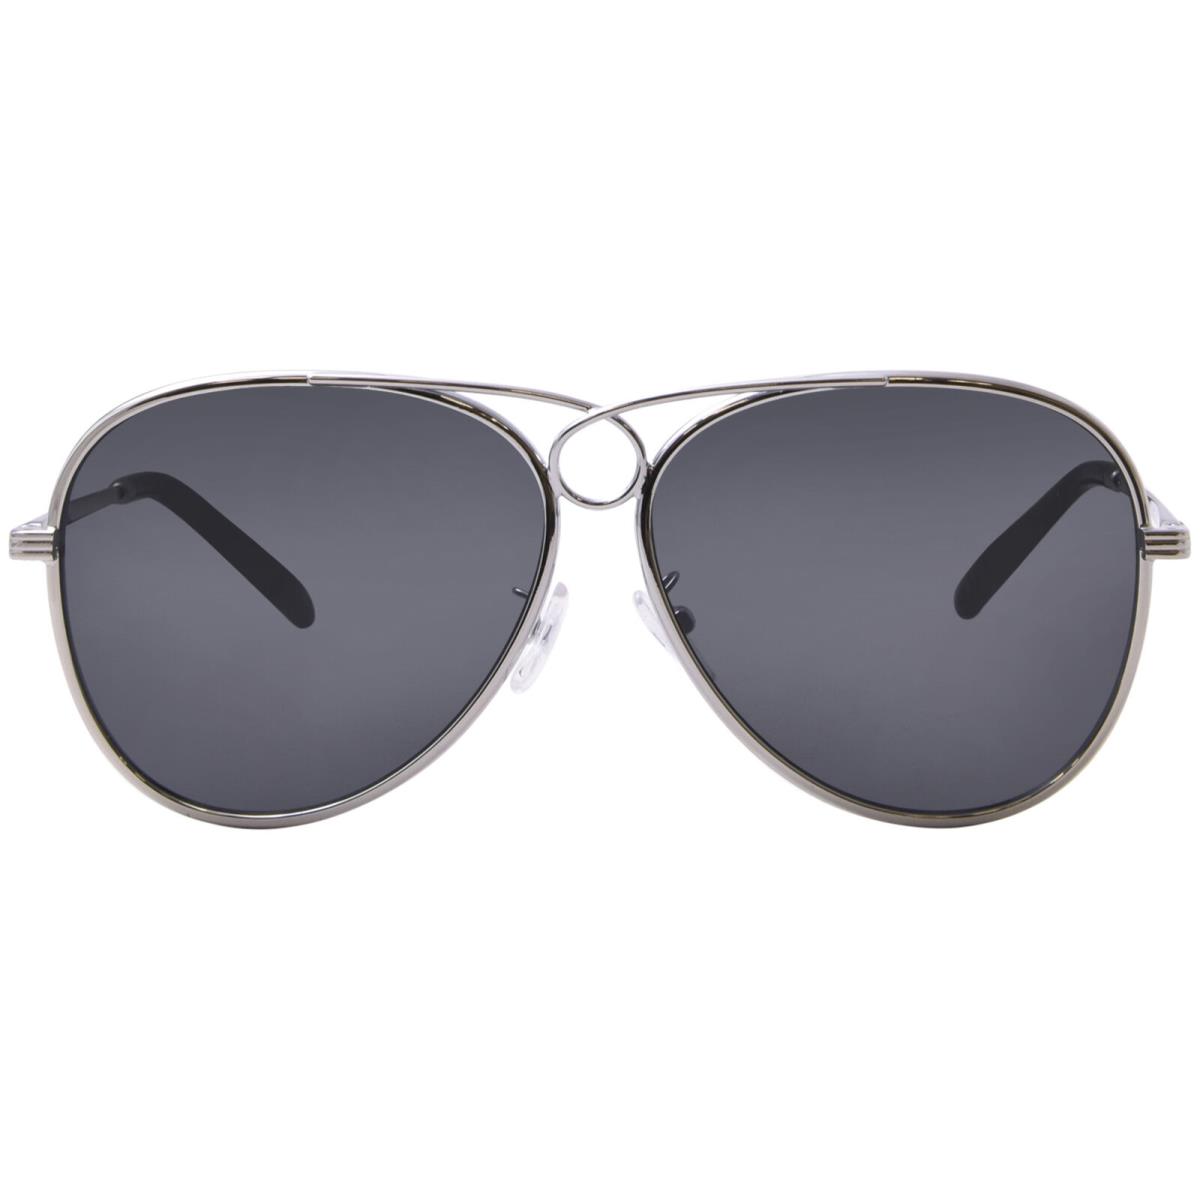 Tory Burch TY6093 331187 Sunglasses Womens Shiny Silver/grey Gradient Pilot 59mm